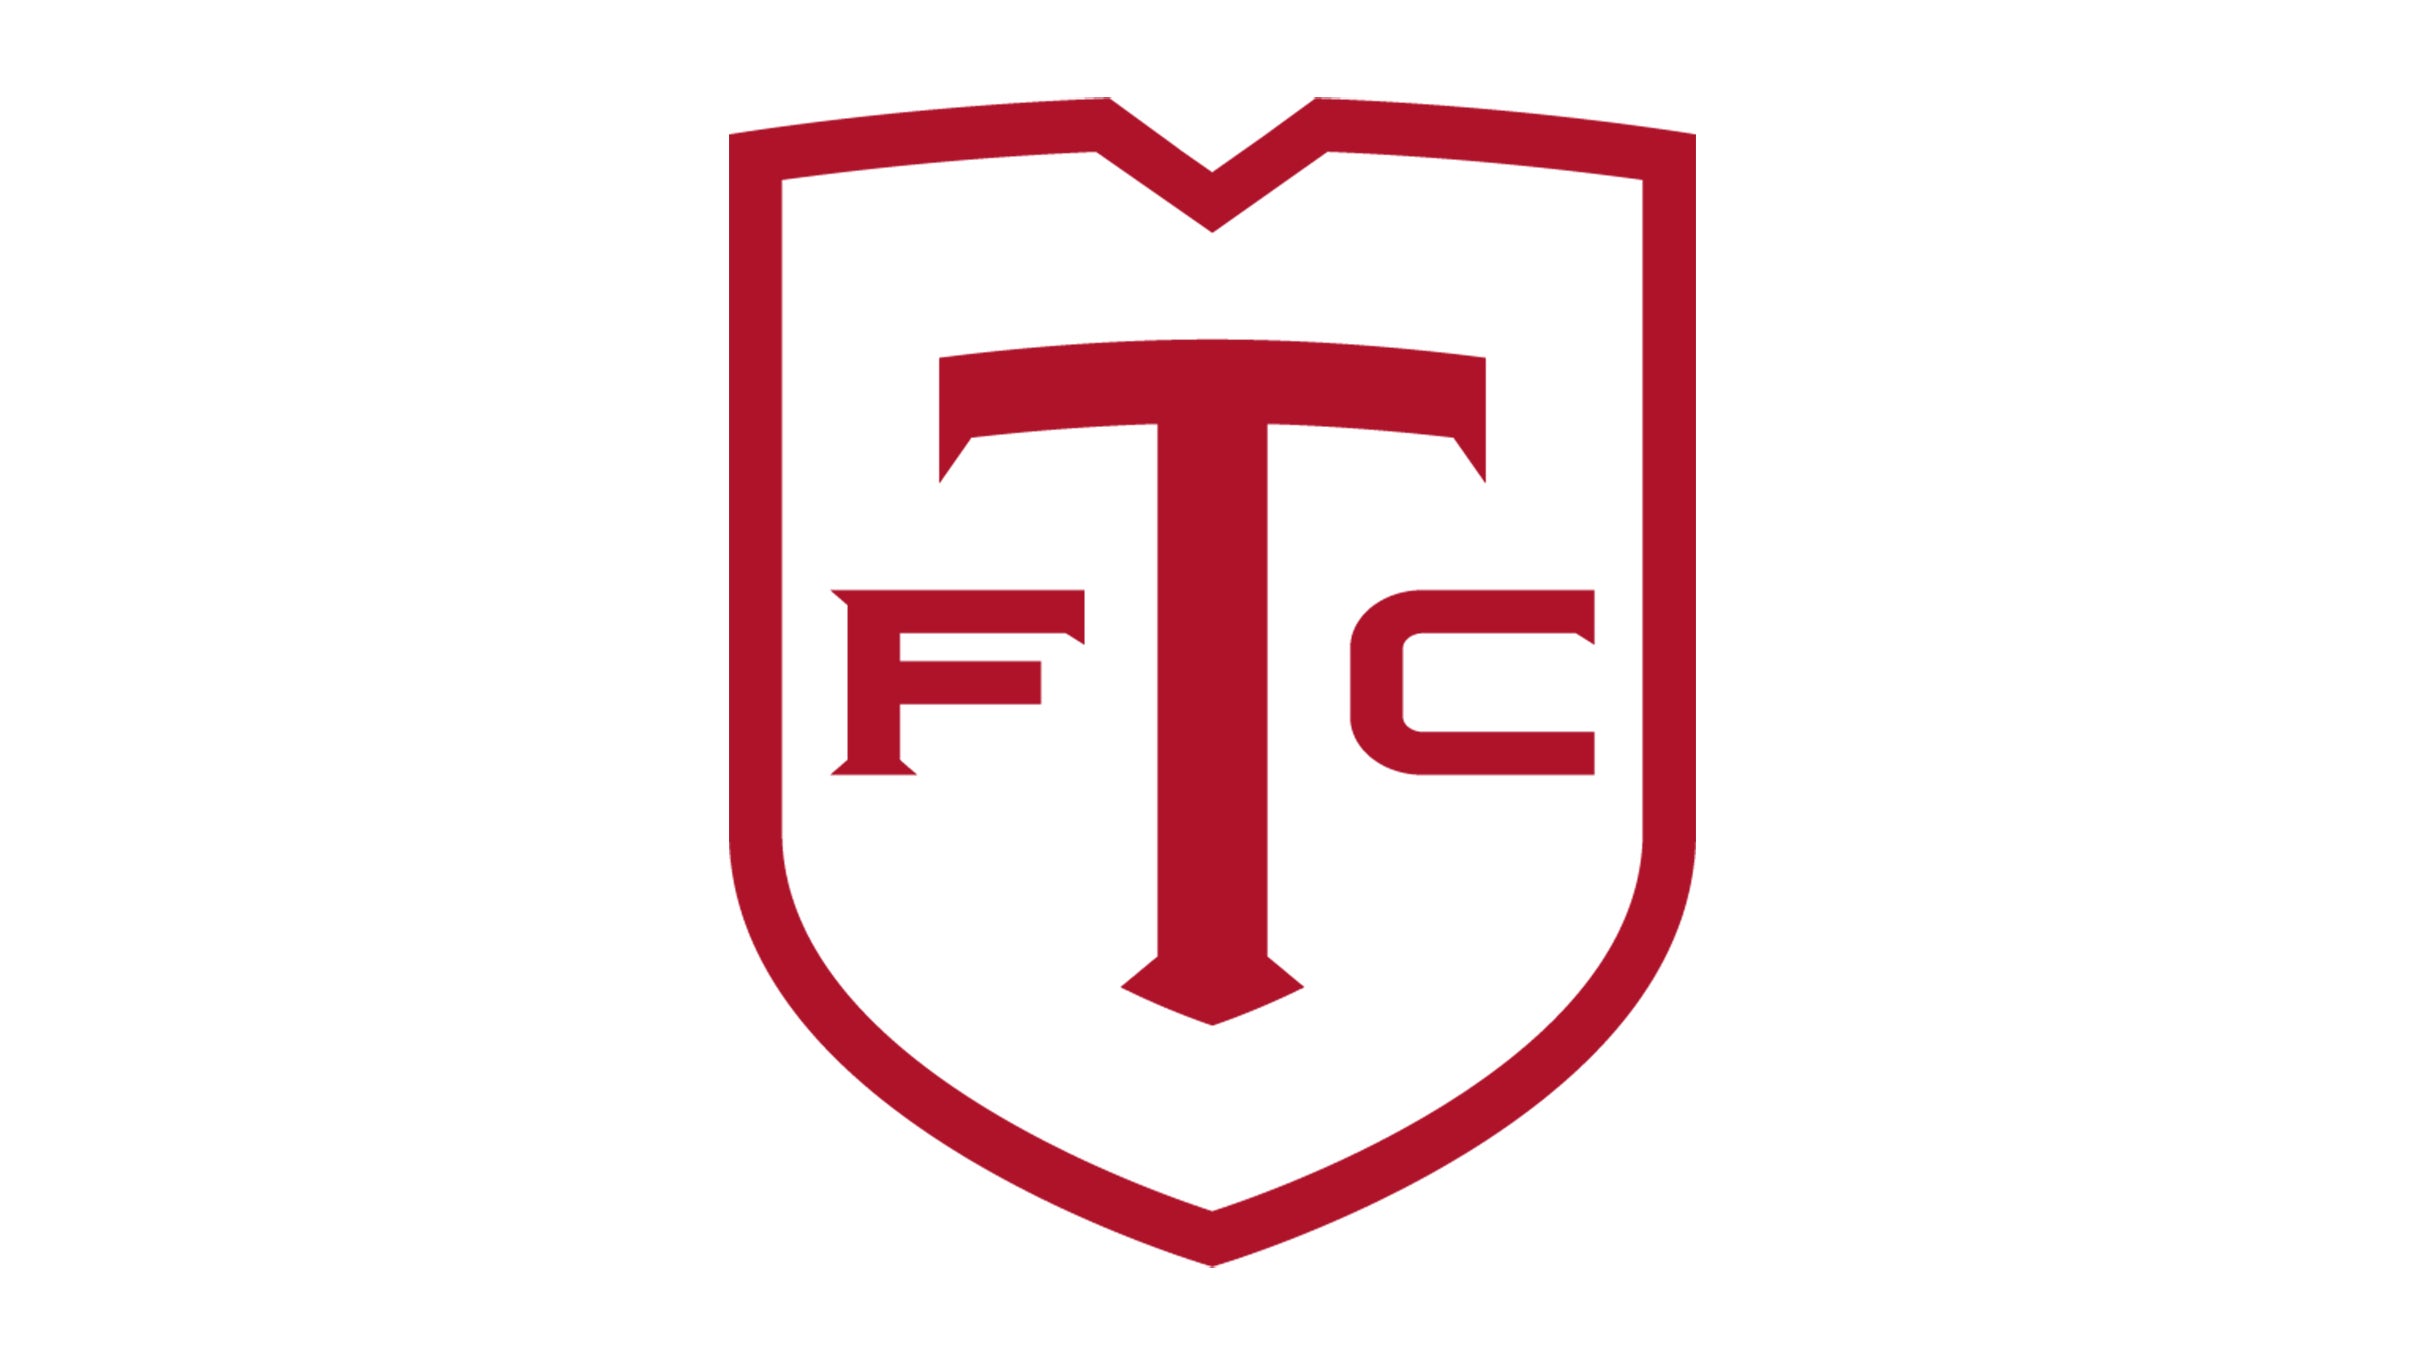 Toronto FC vs New York City Football Club presale passwords